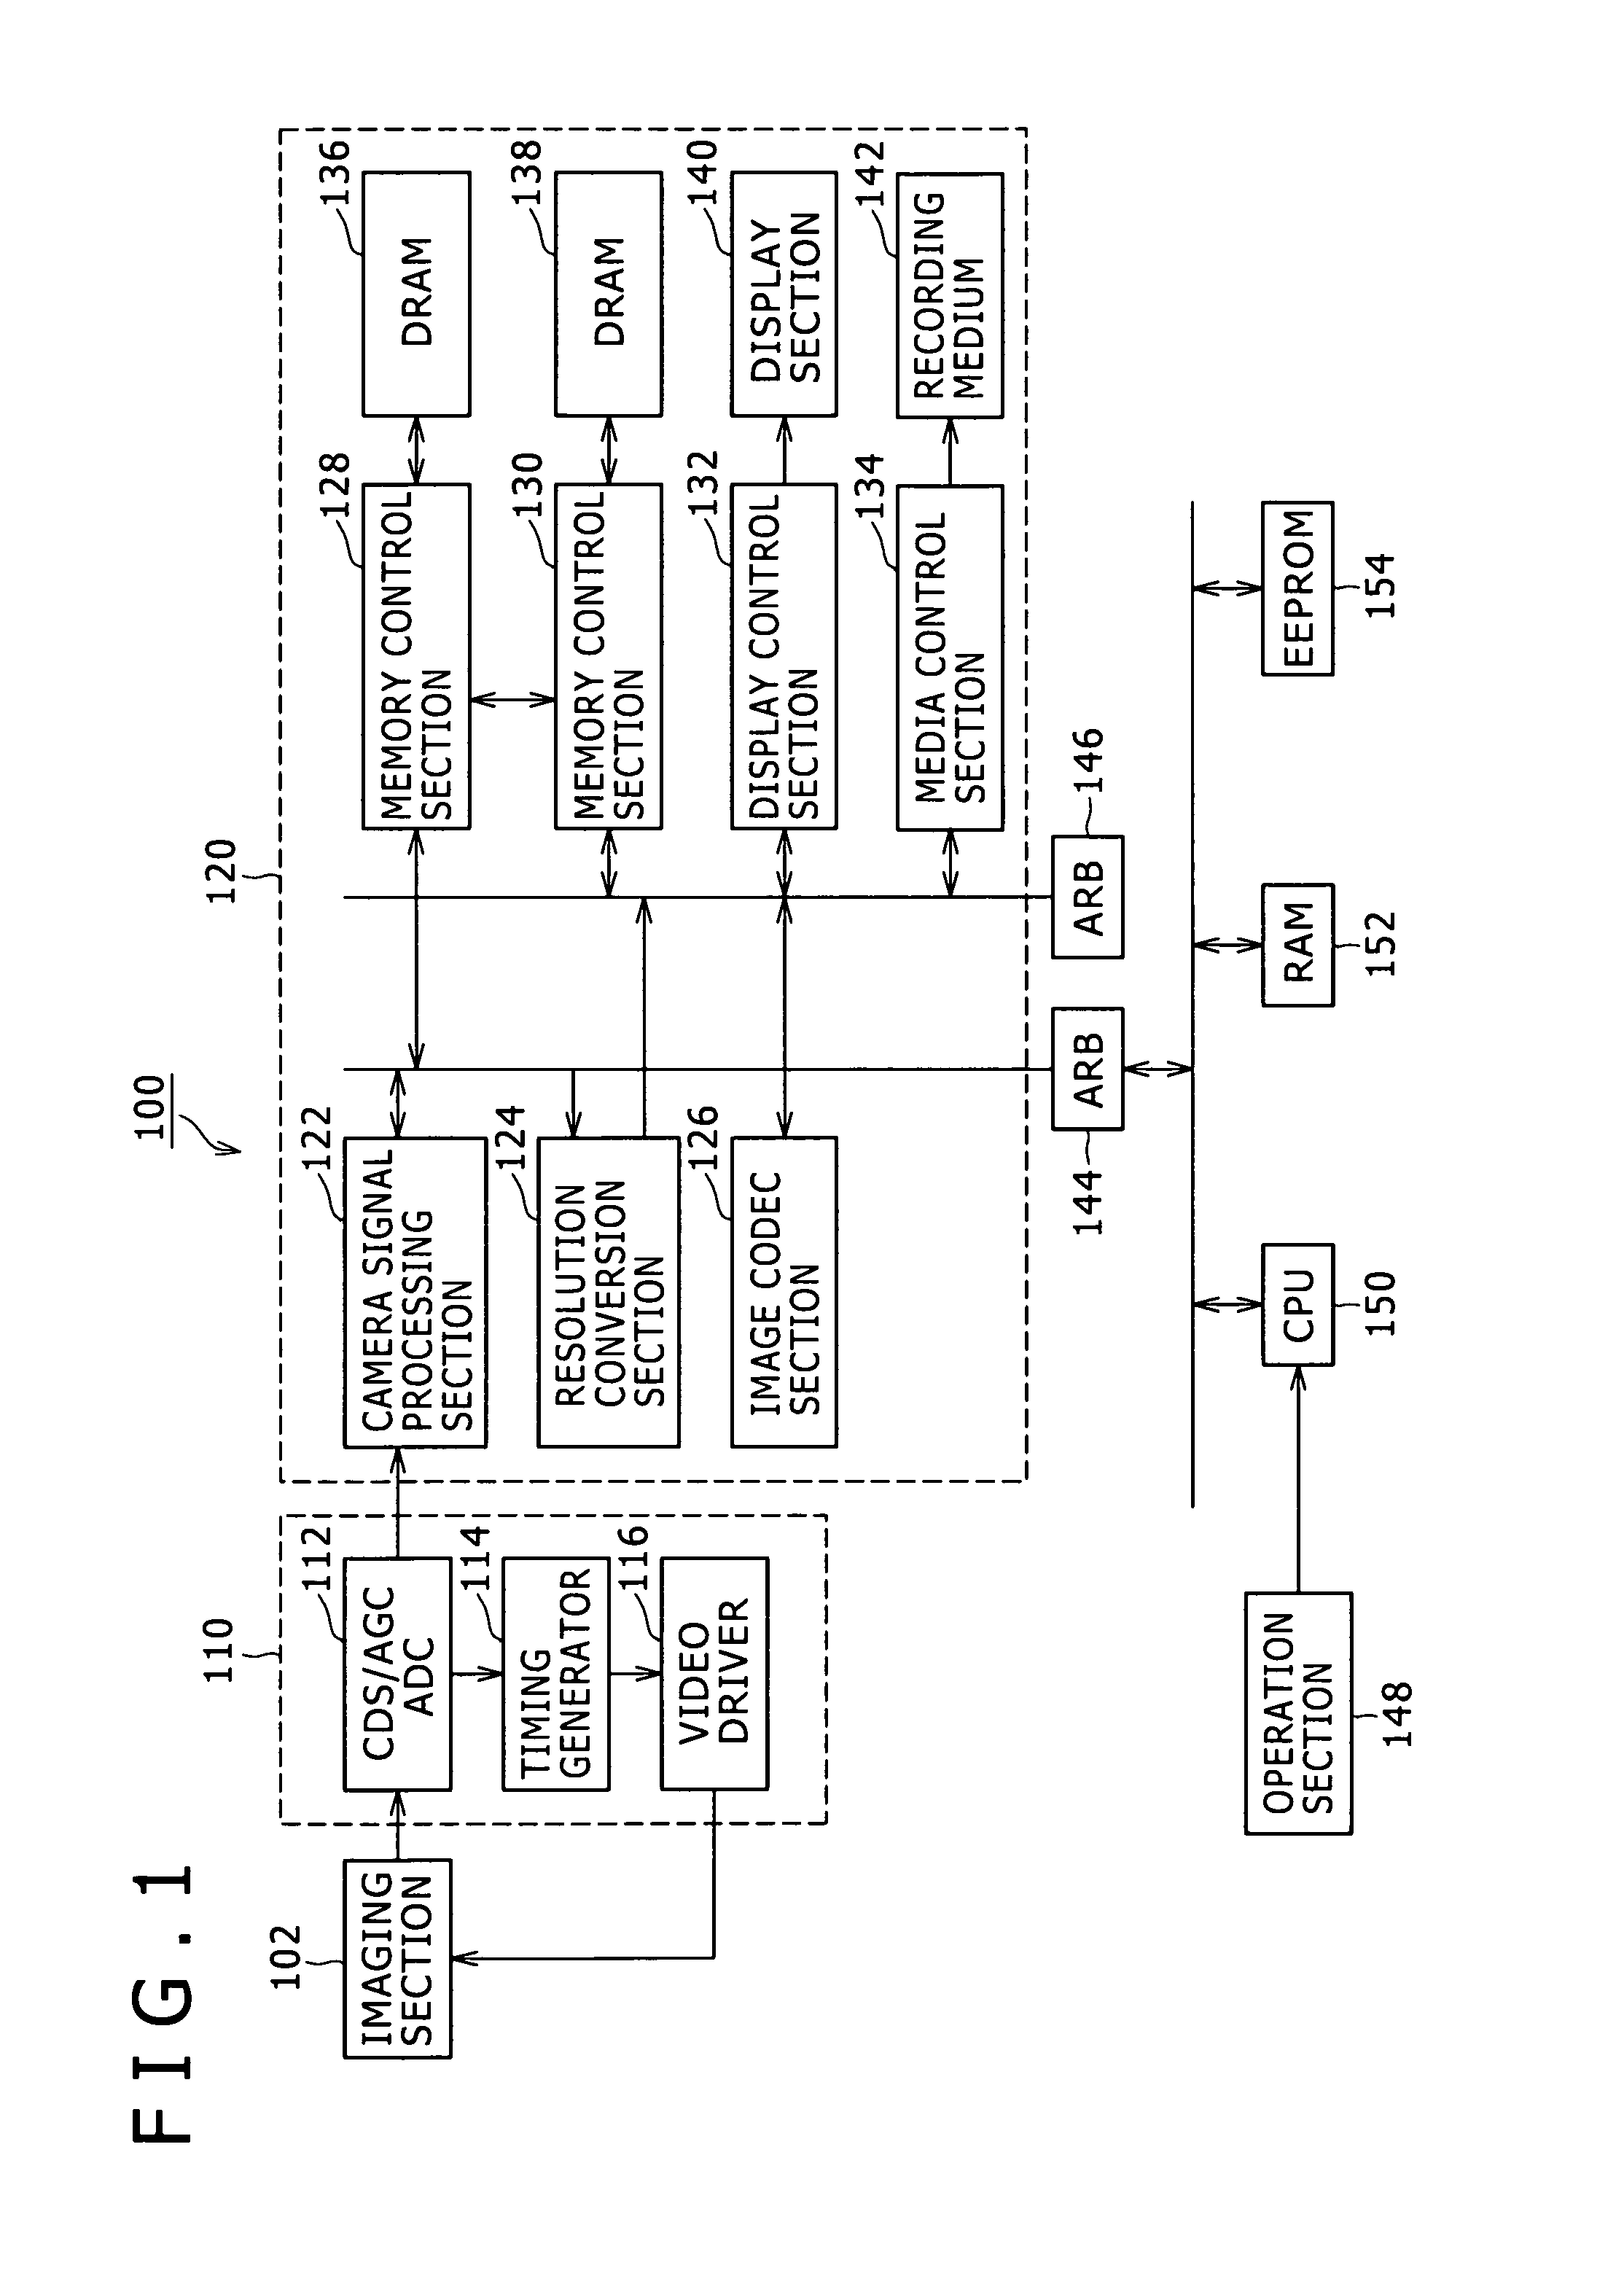 Memory control apparatus, memory control method, and computer program